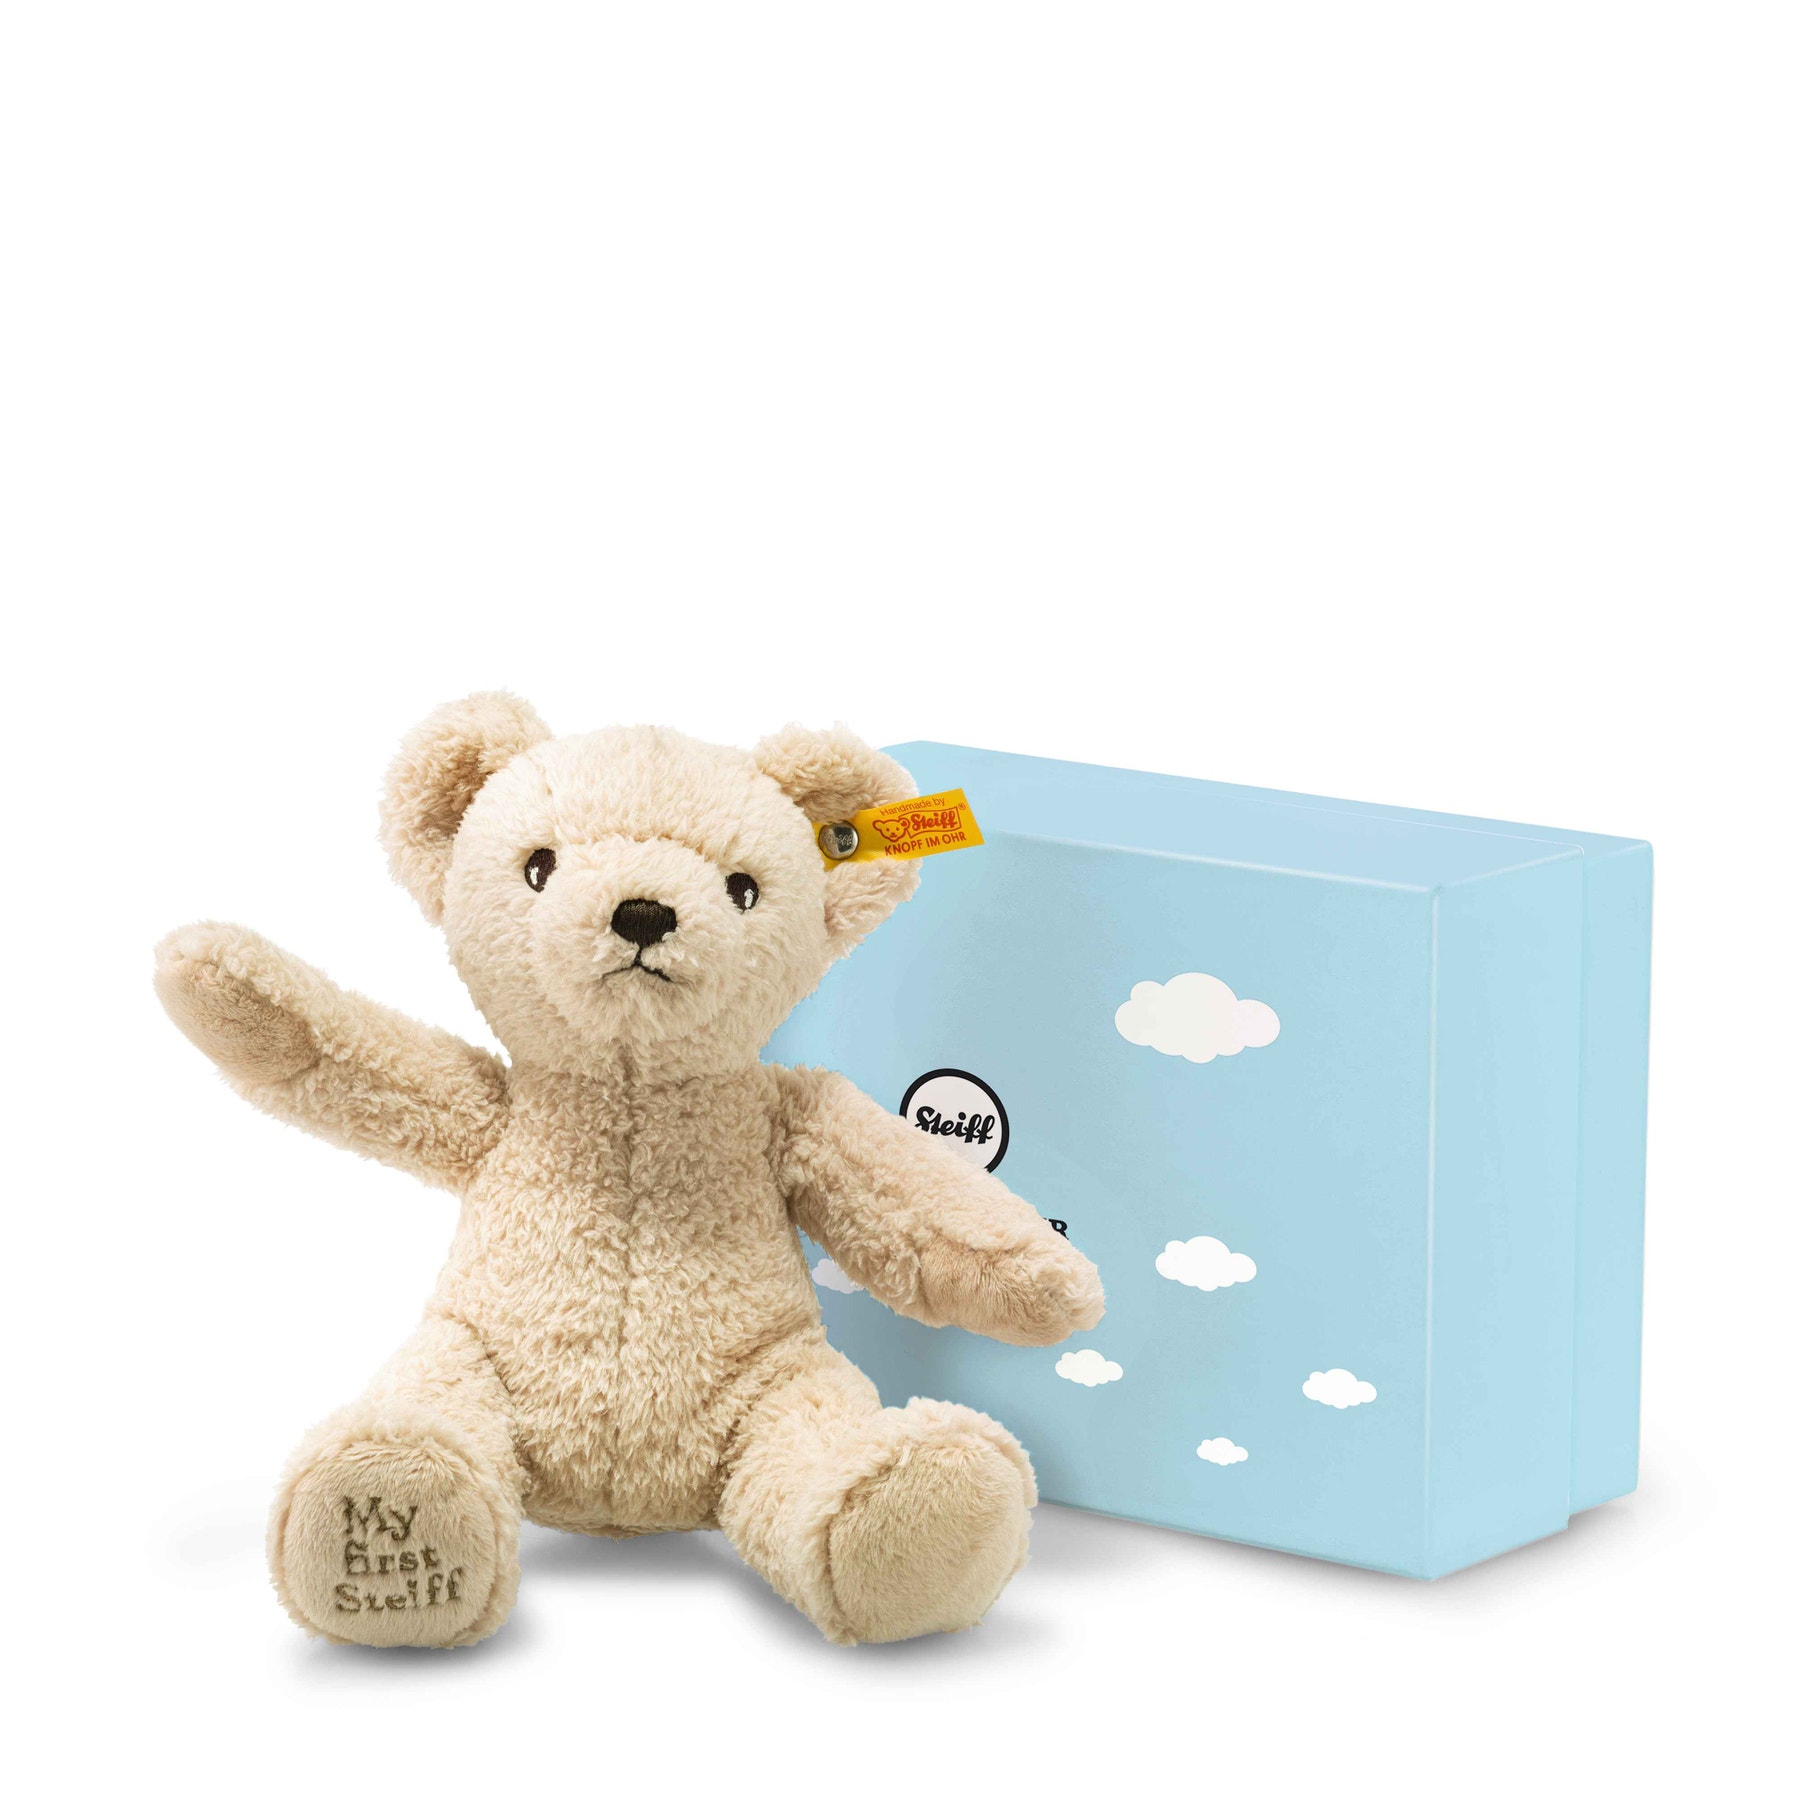 Steiff Teddy Bear My First Steiff Pink 241352 New Baby Girl Gift Boxed Present 